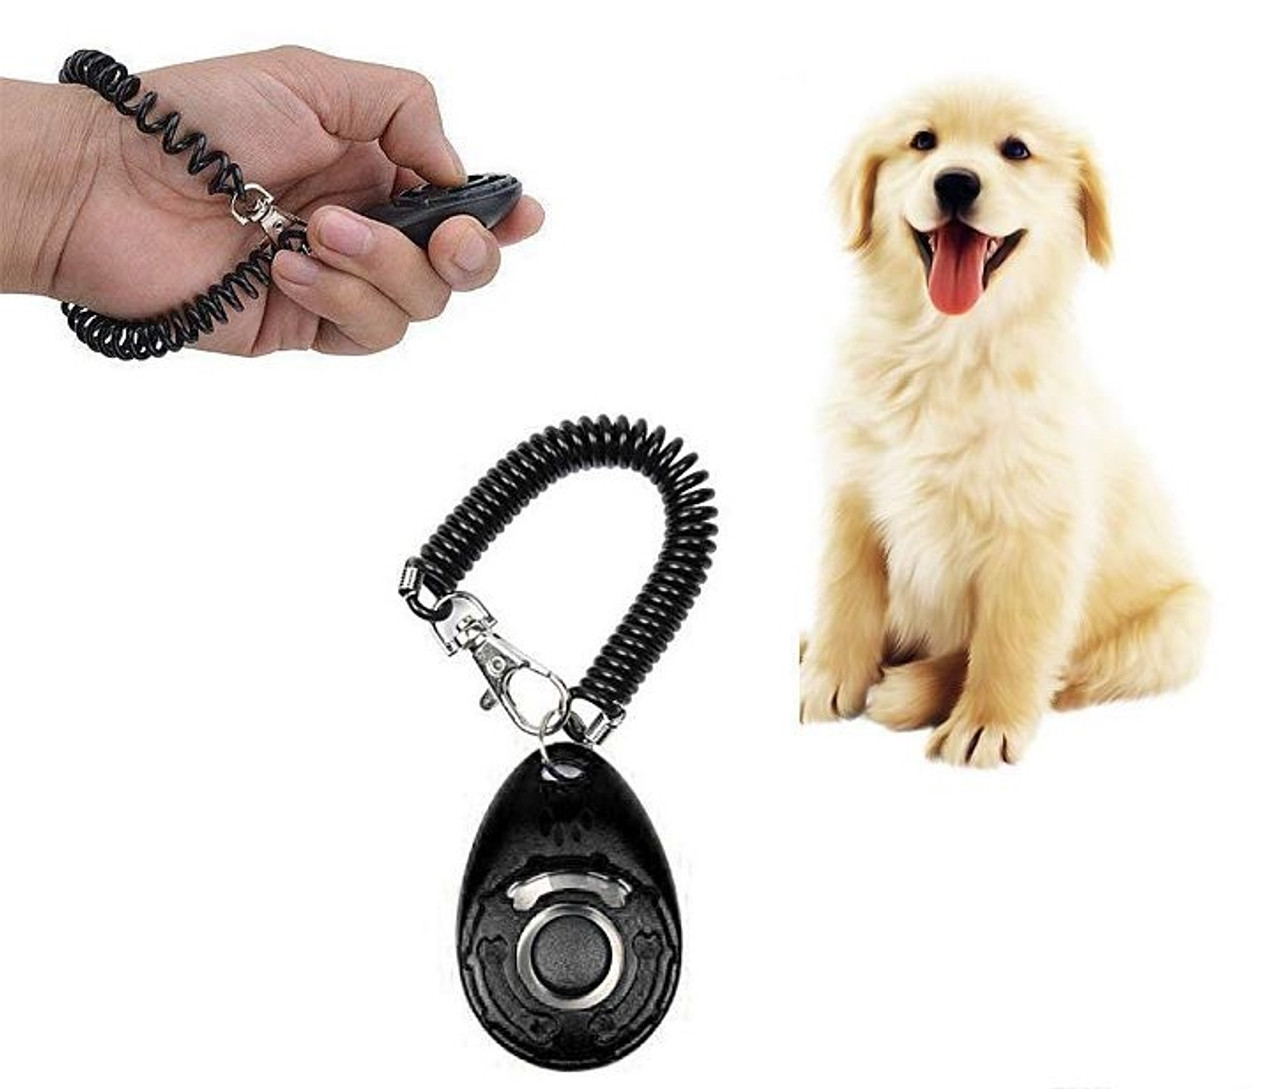 Dashing Dog Pet Treat Launcher With Wrist Strap